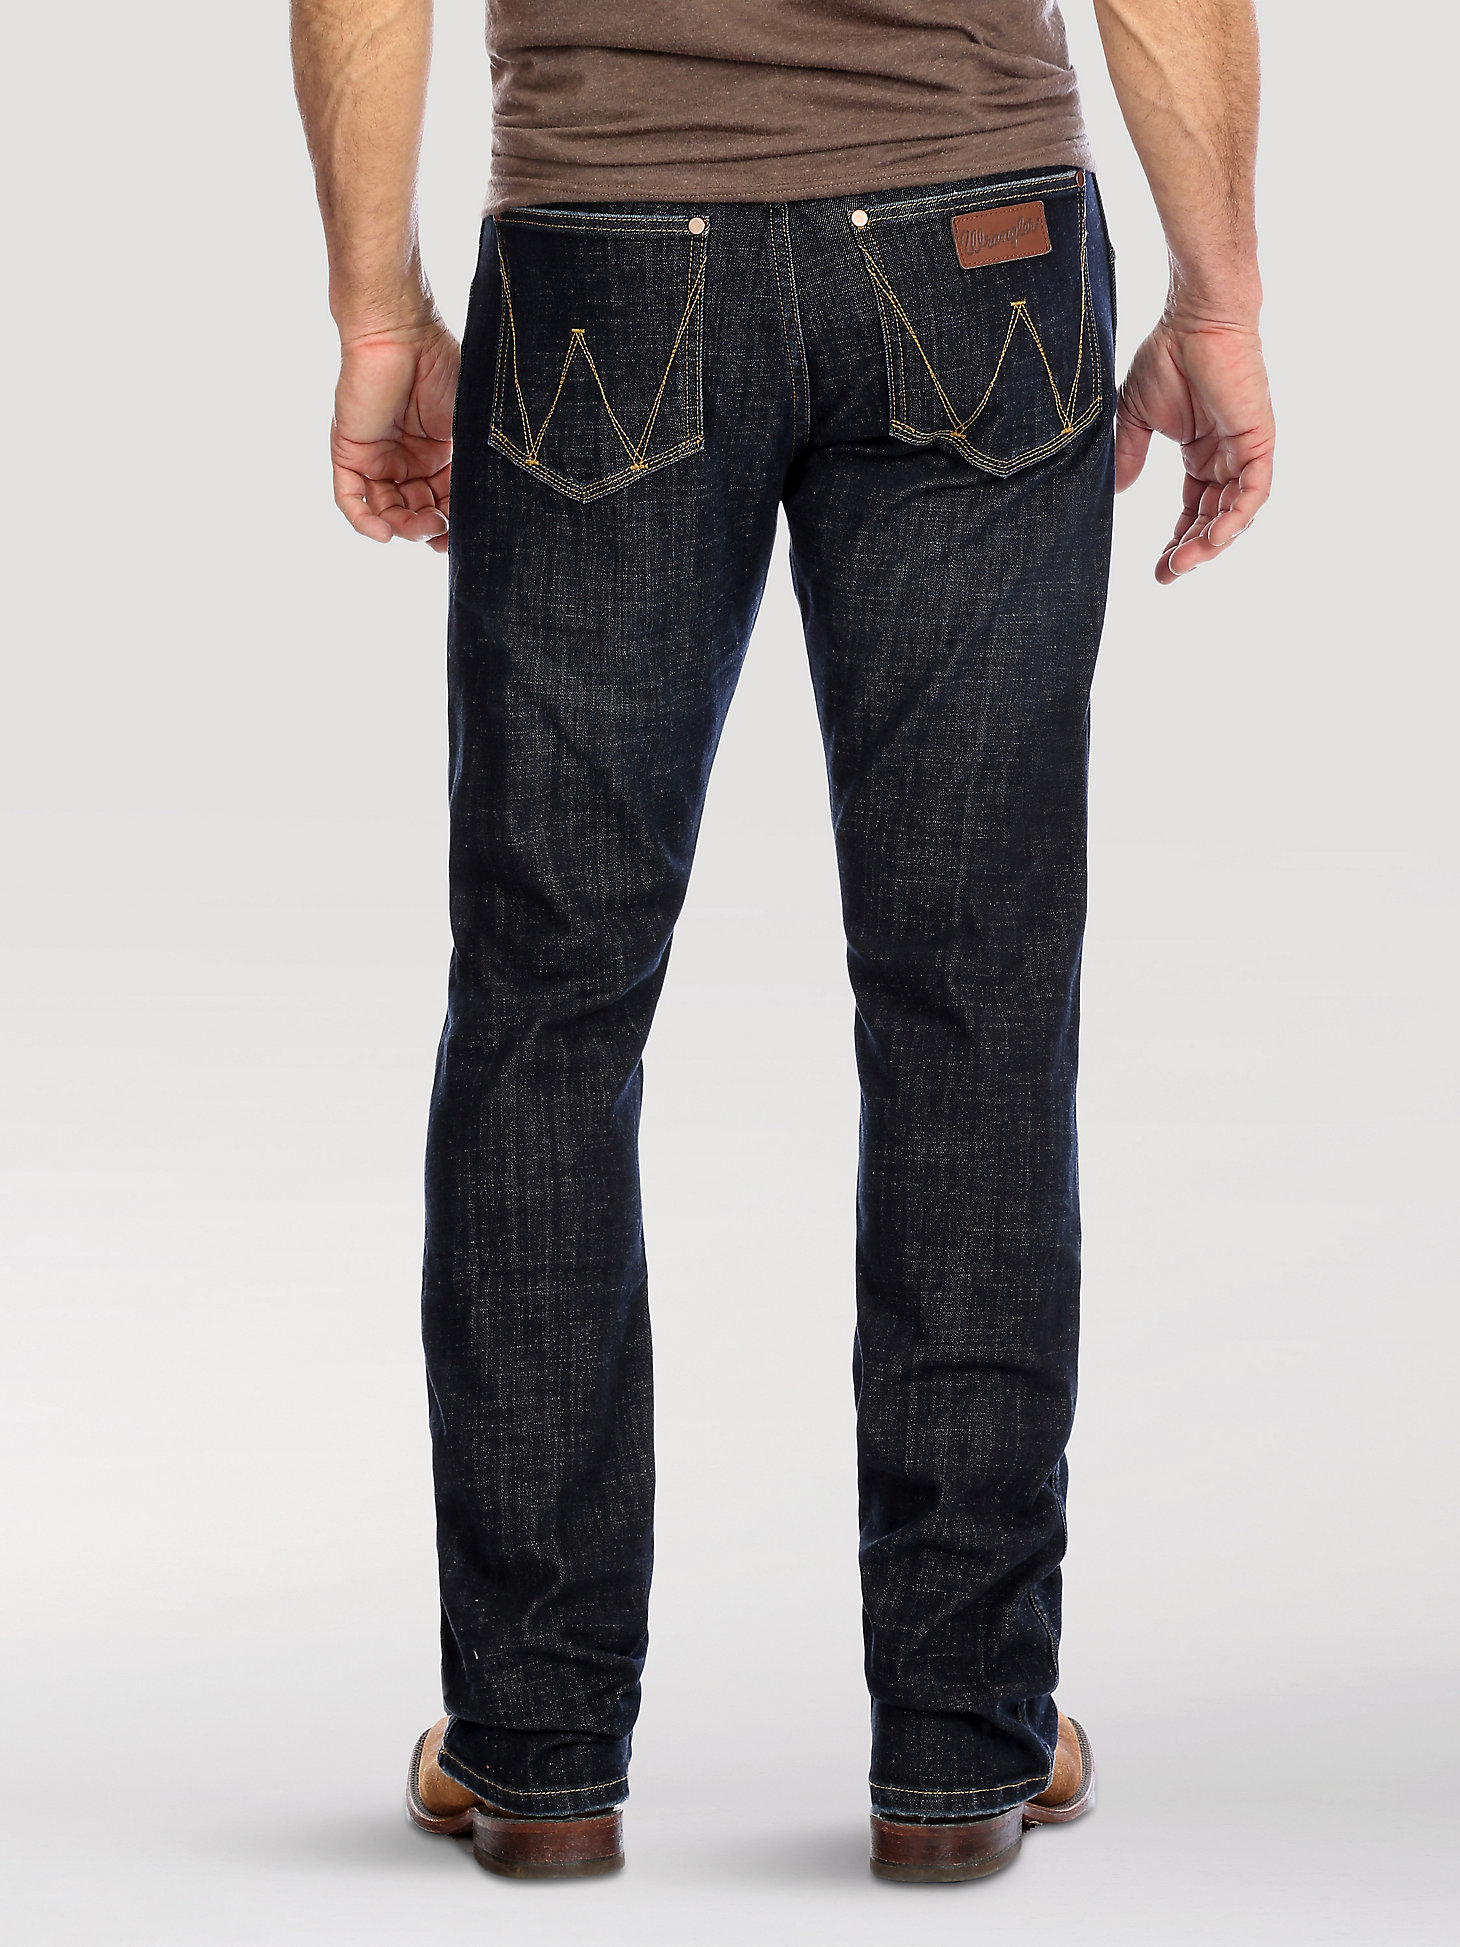 Men's Wrangler Retro® Slim Fit Bootcut Jean in Dax alternative view 3